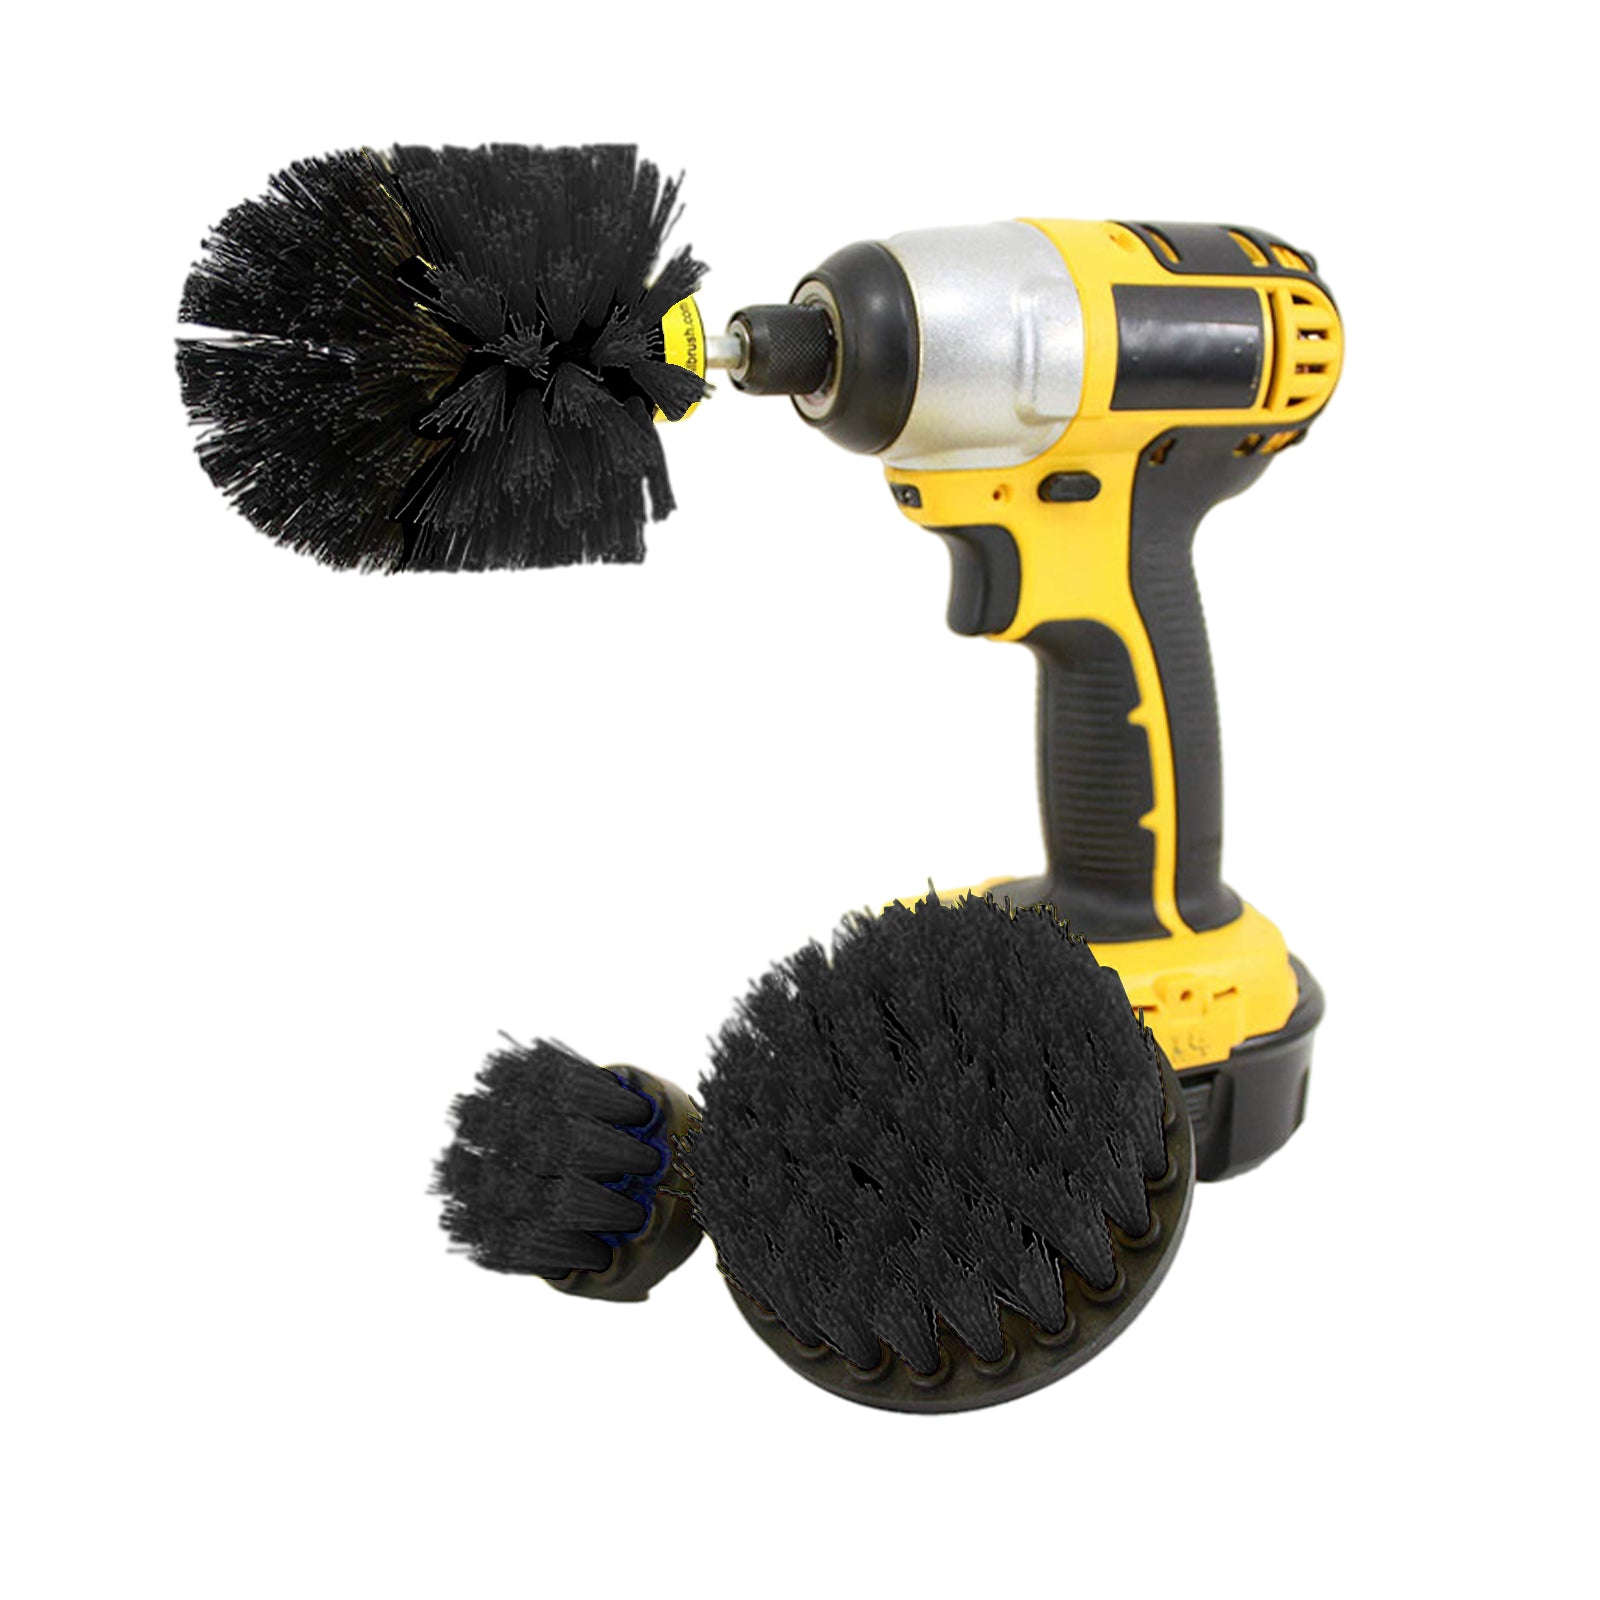 3x Drill Brush Power Scrubber All Purpose for Floors Bathroom Bathtub Black